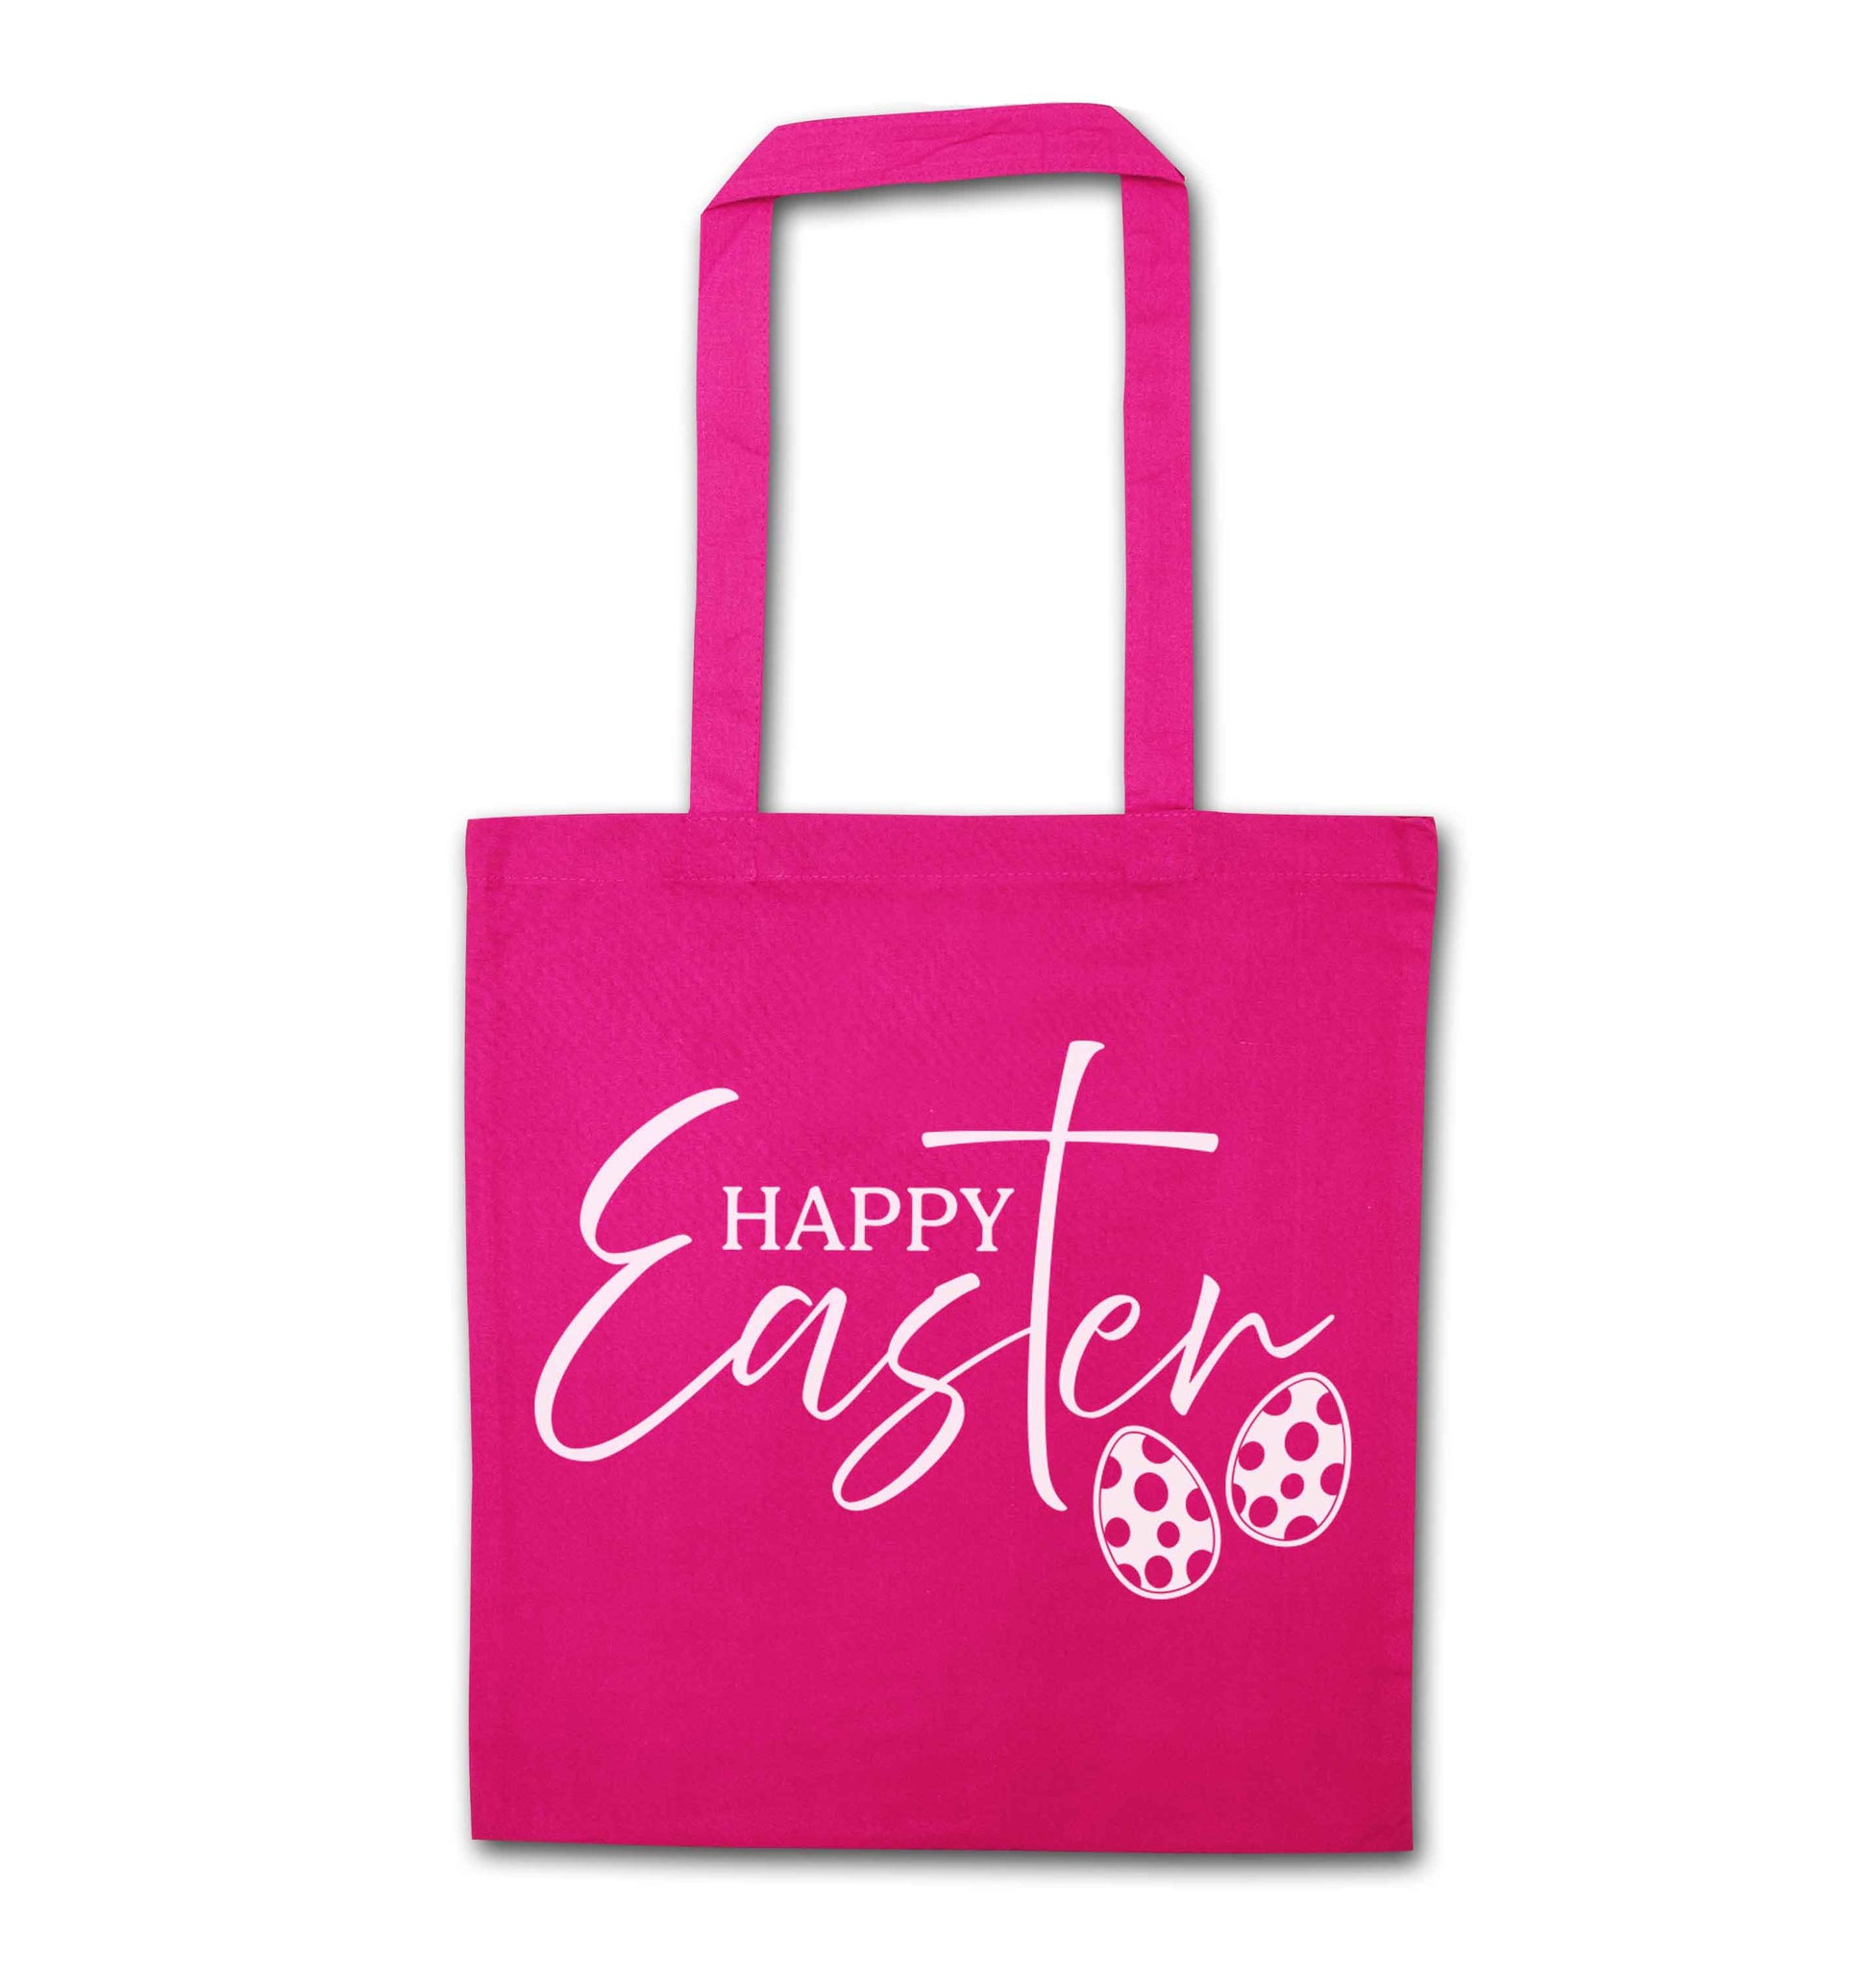 Happy Easter pink tote bag